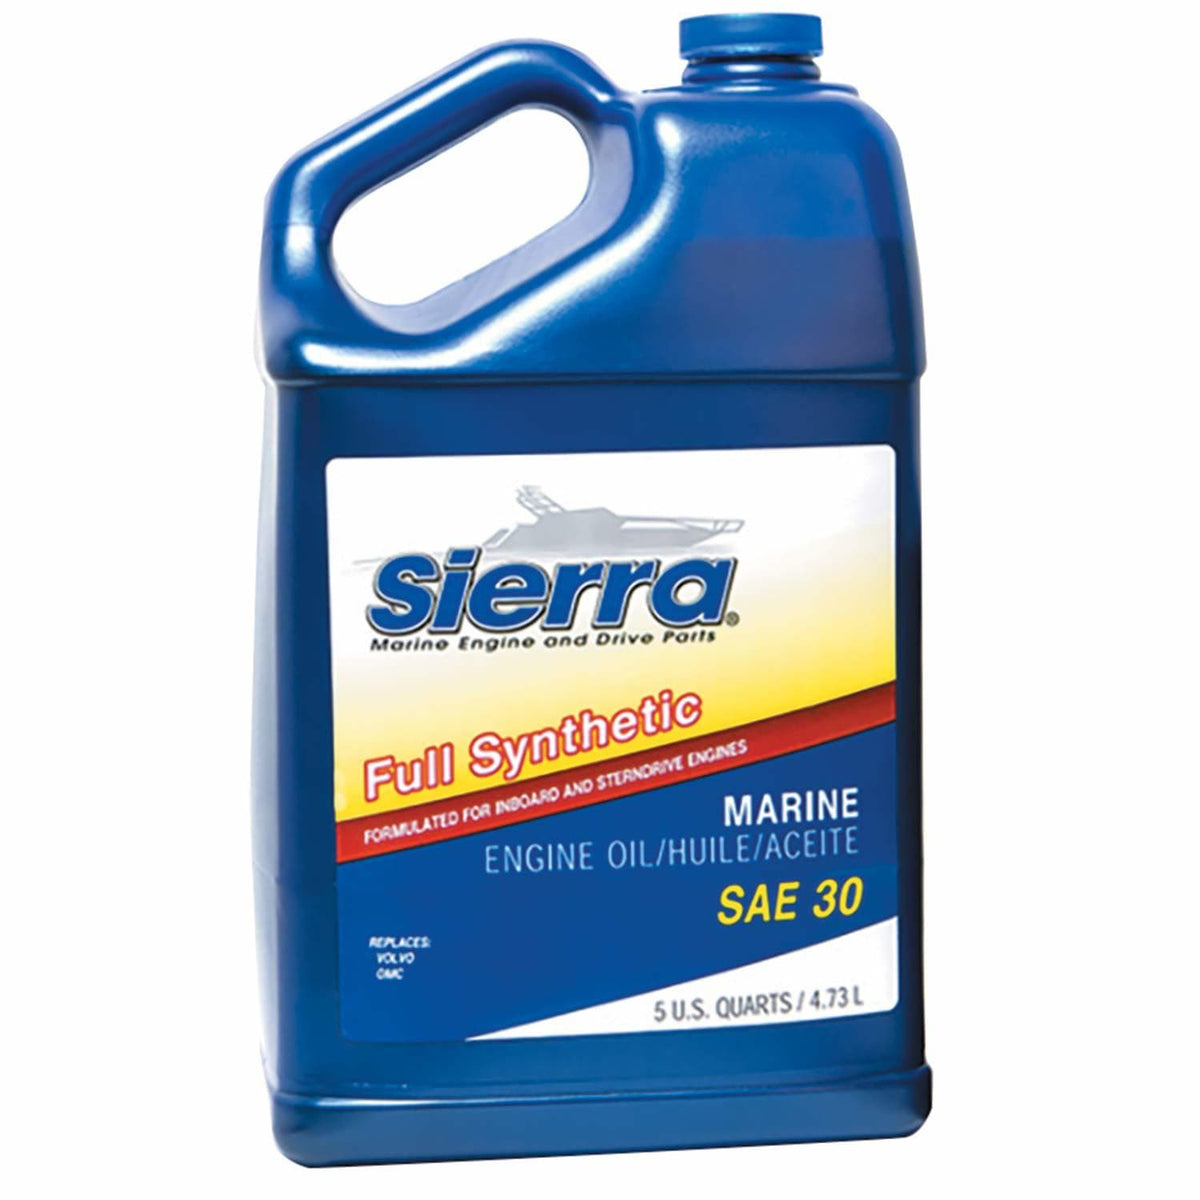 Sierra Full Synthetic Marine Engine Oil - 4.73L SAE 30